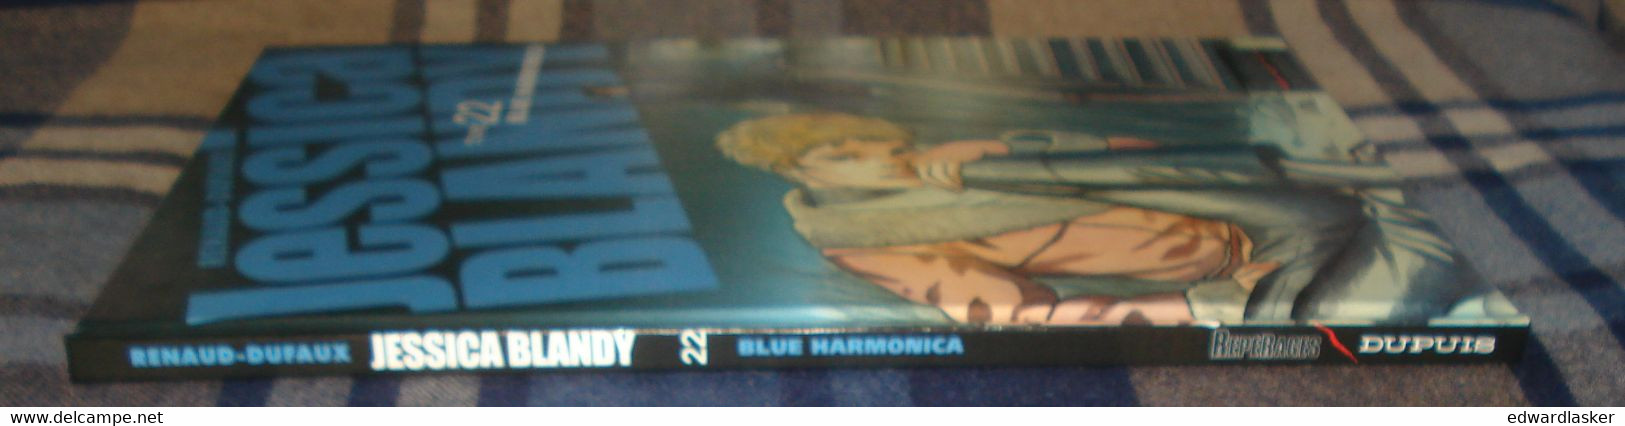 JESSICA BLANDY N°22 : Blue Harmonica - EO Dupuis 2003 - Renaud Dufaux - Jessica Blandy